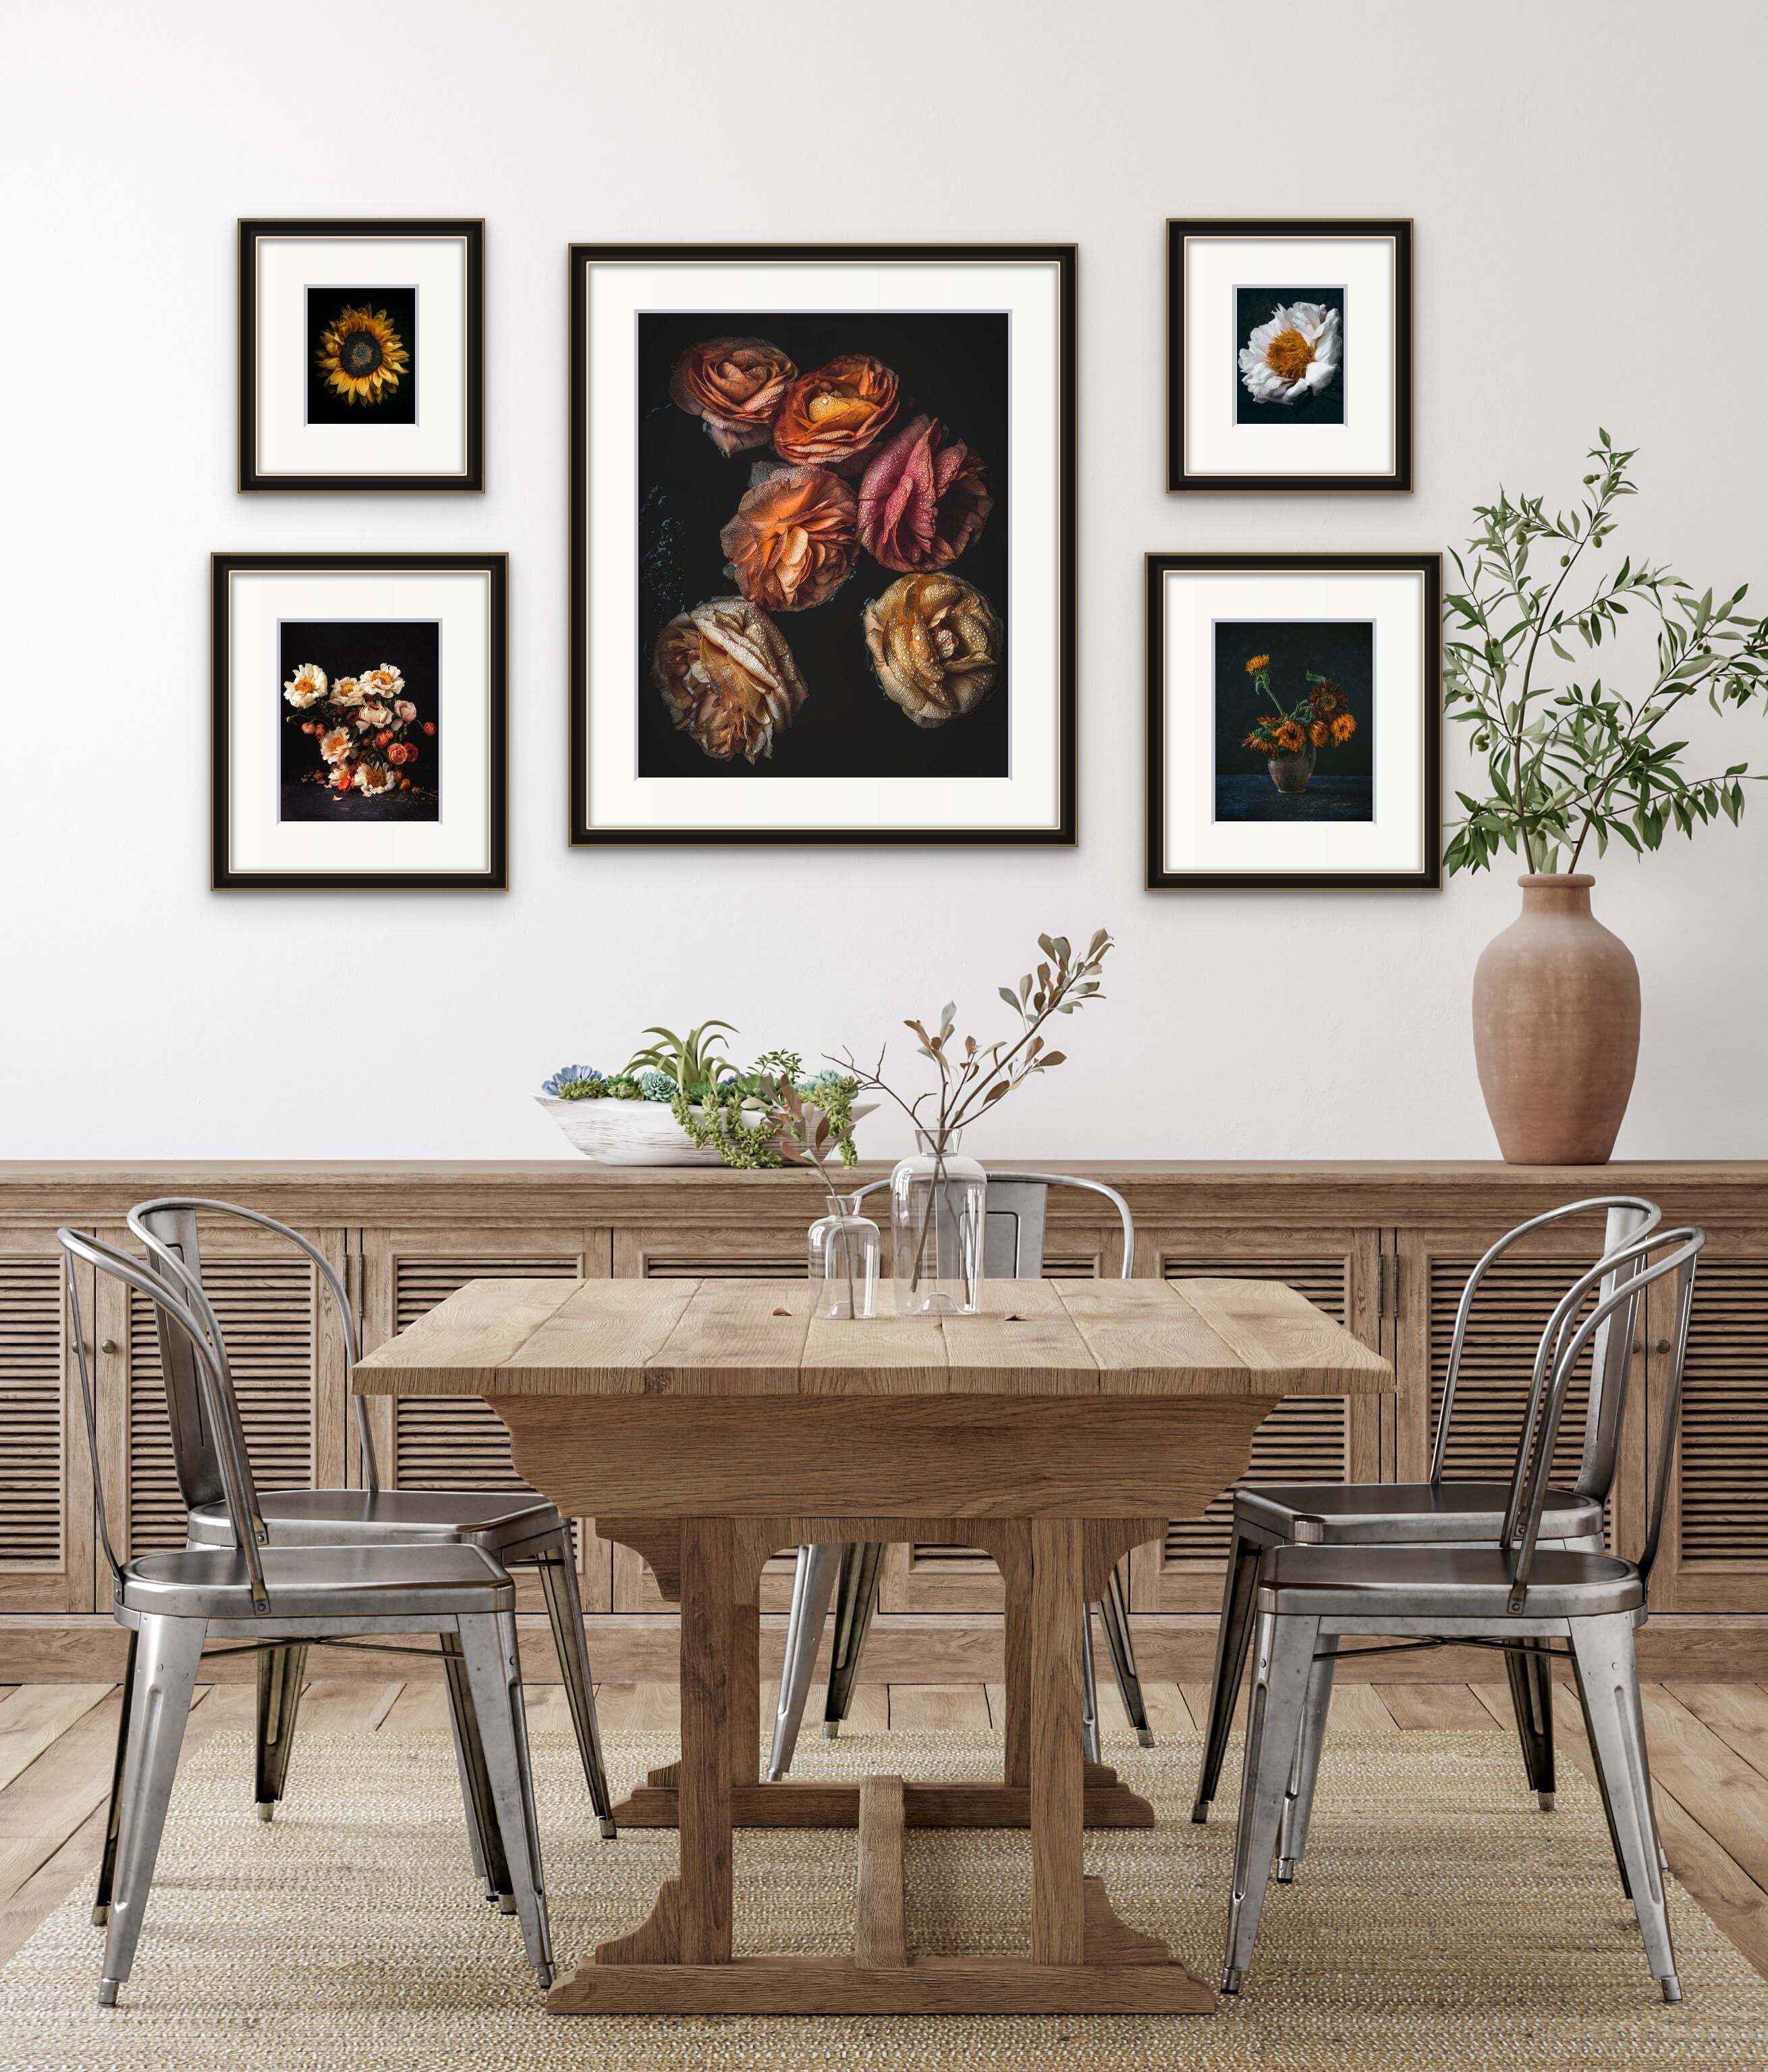 framed flower art prints on wall above table